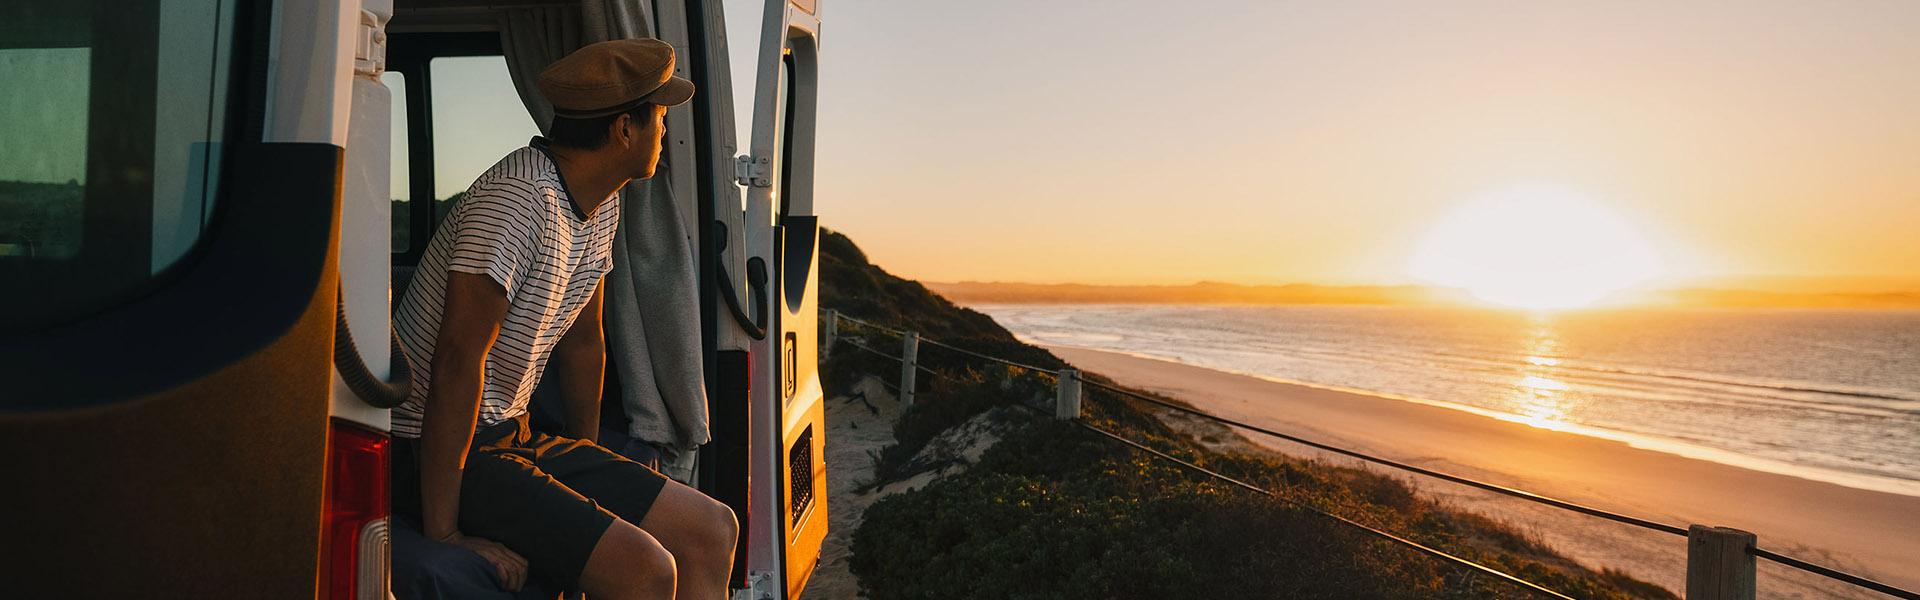 Young man sitting in Apollo camper enjoying sunset at Almonta Beach, South Australia